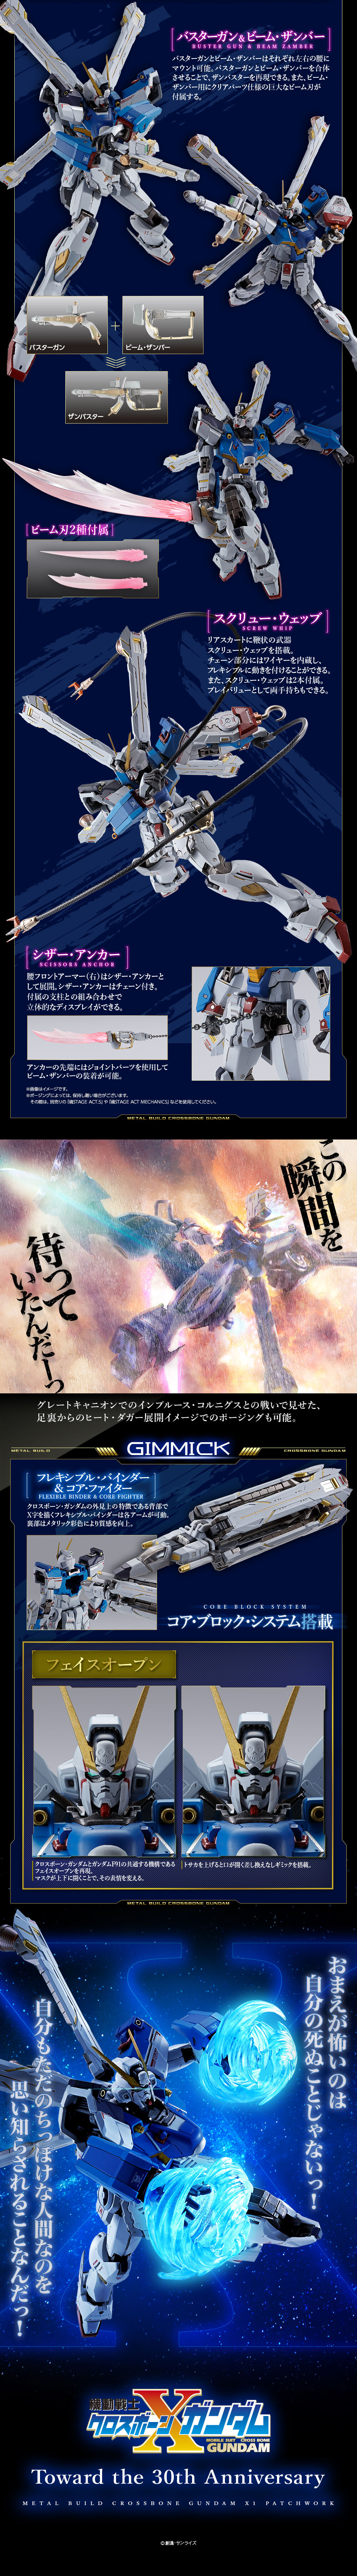 Metal Build XM-X1C(F97) Crossbone Gundam X-1(Patch Work)